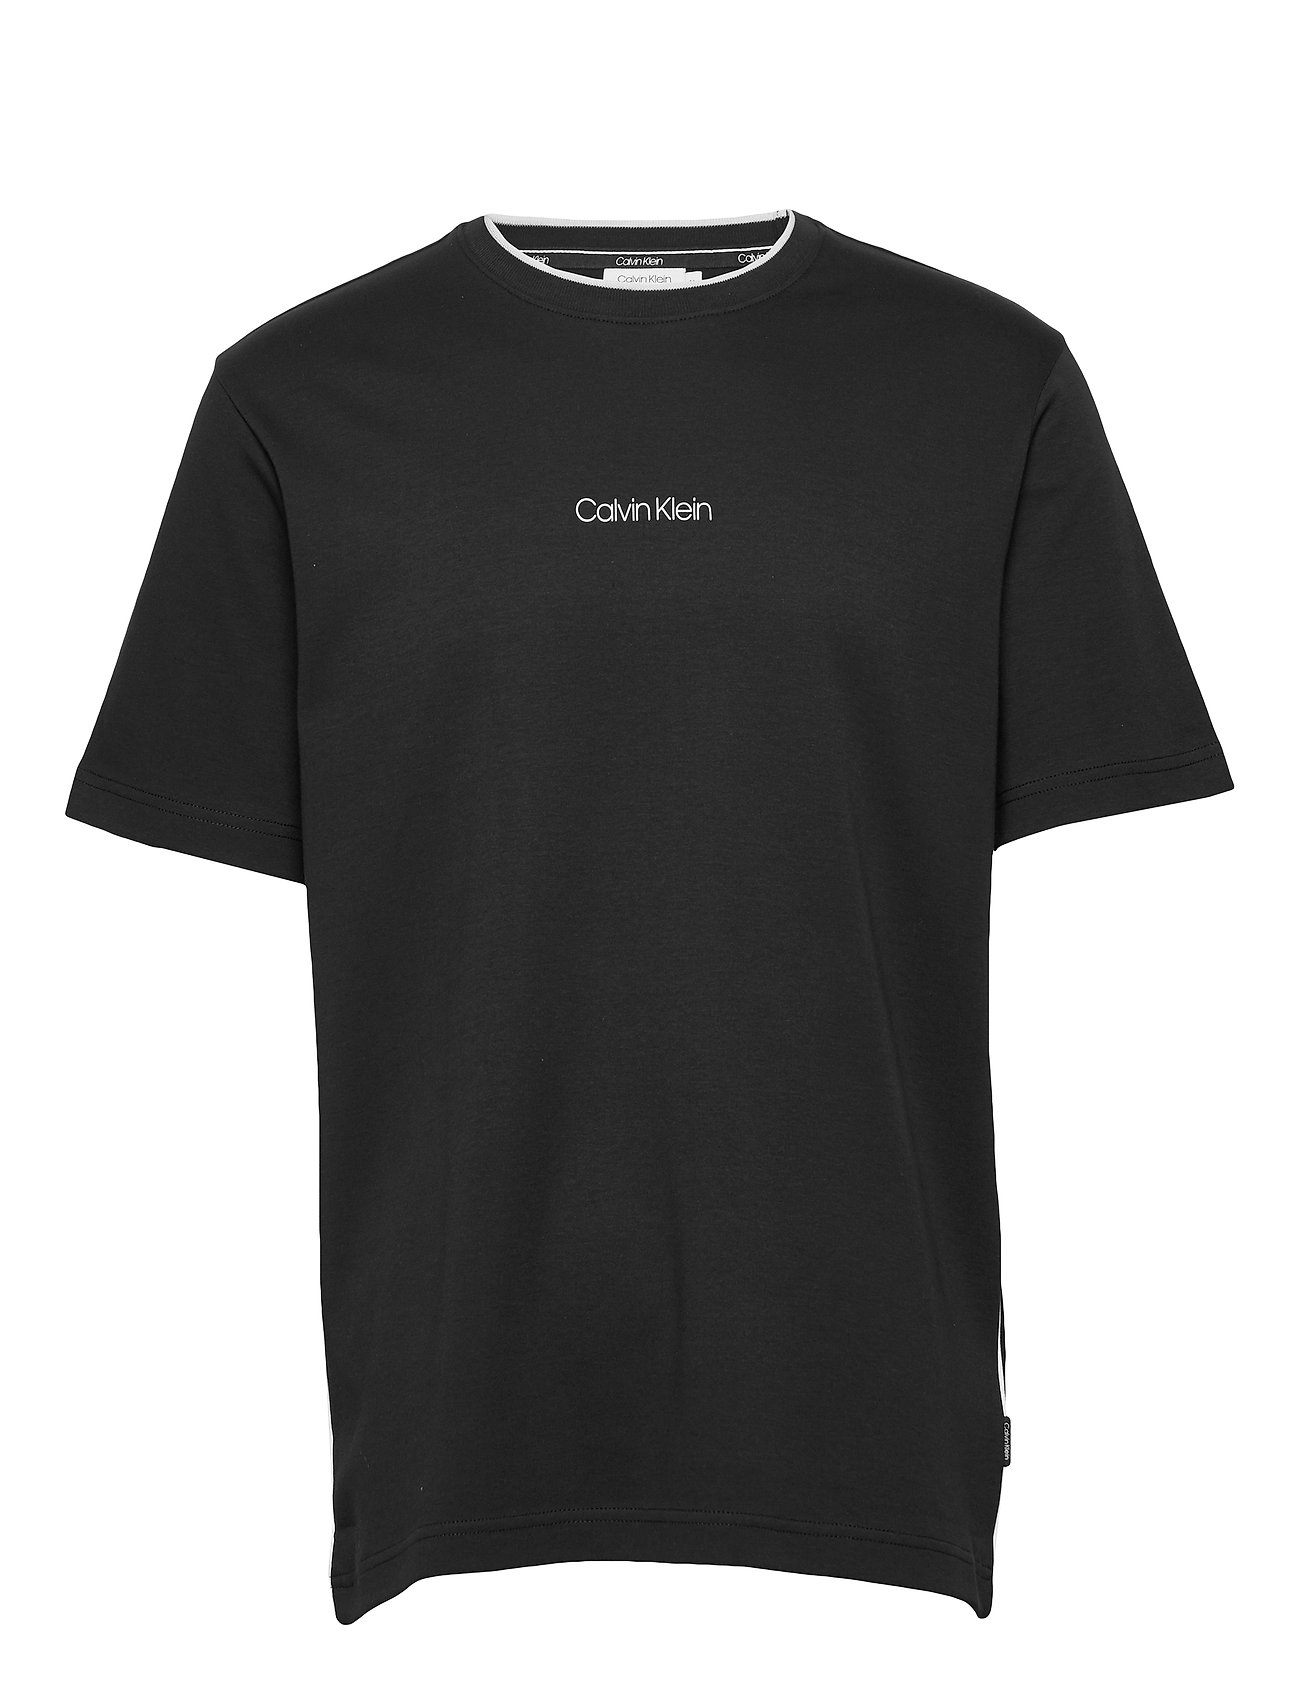 calvin klein small logo t shirt